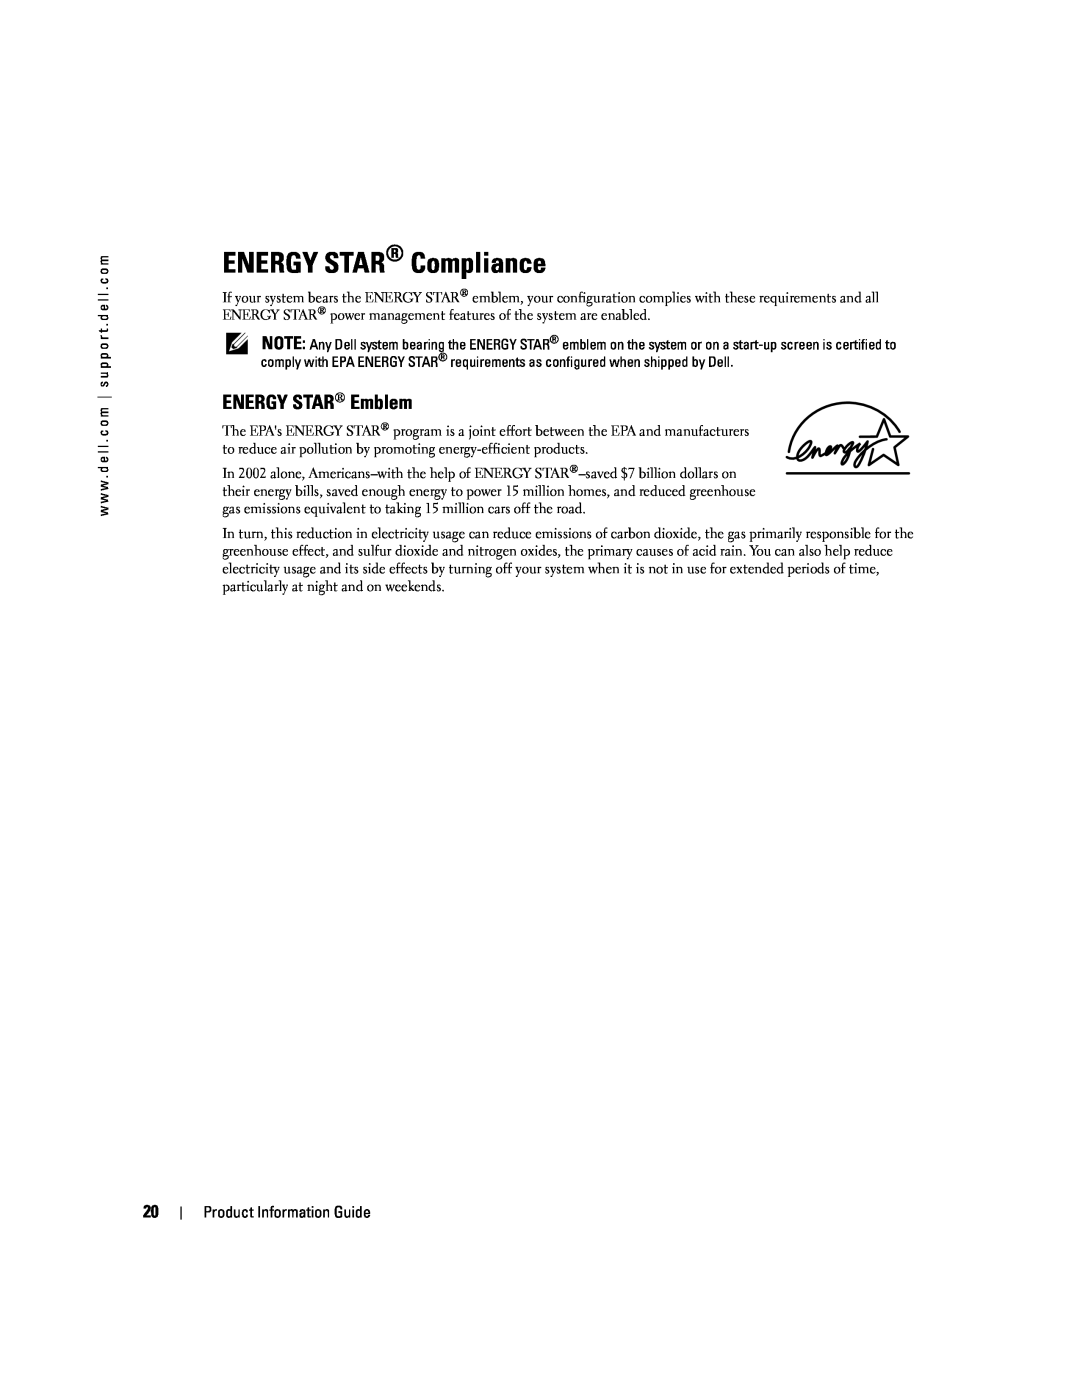 Dell W4200 manual ENERGY STAR Compliance, ENERGY STAR Emblem 